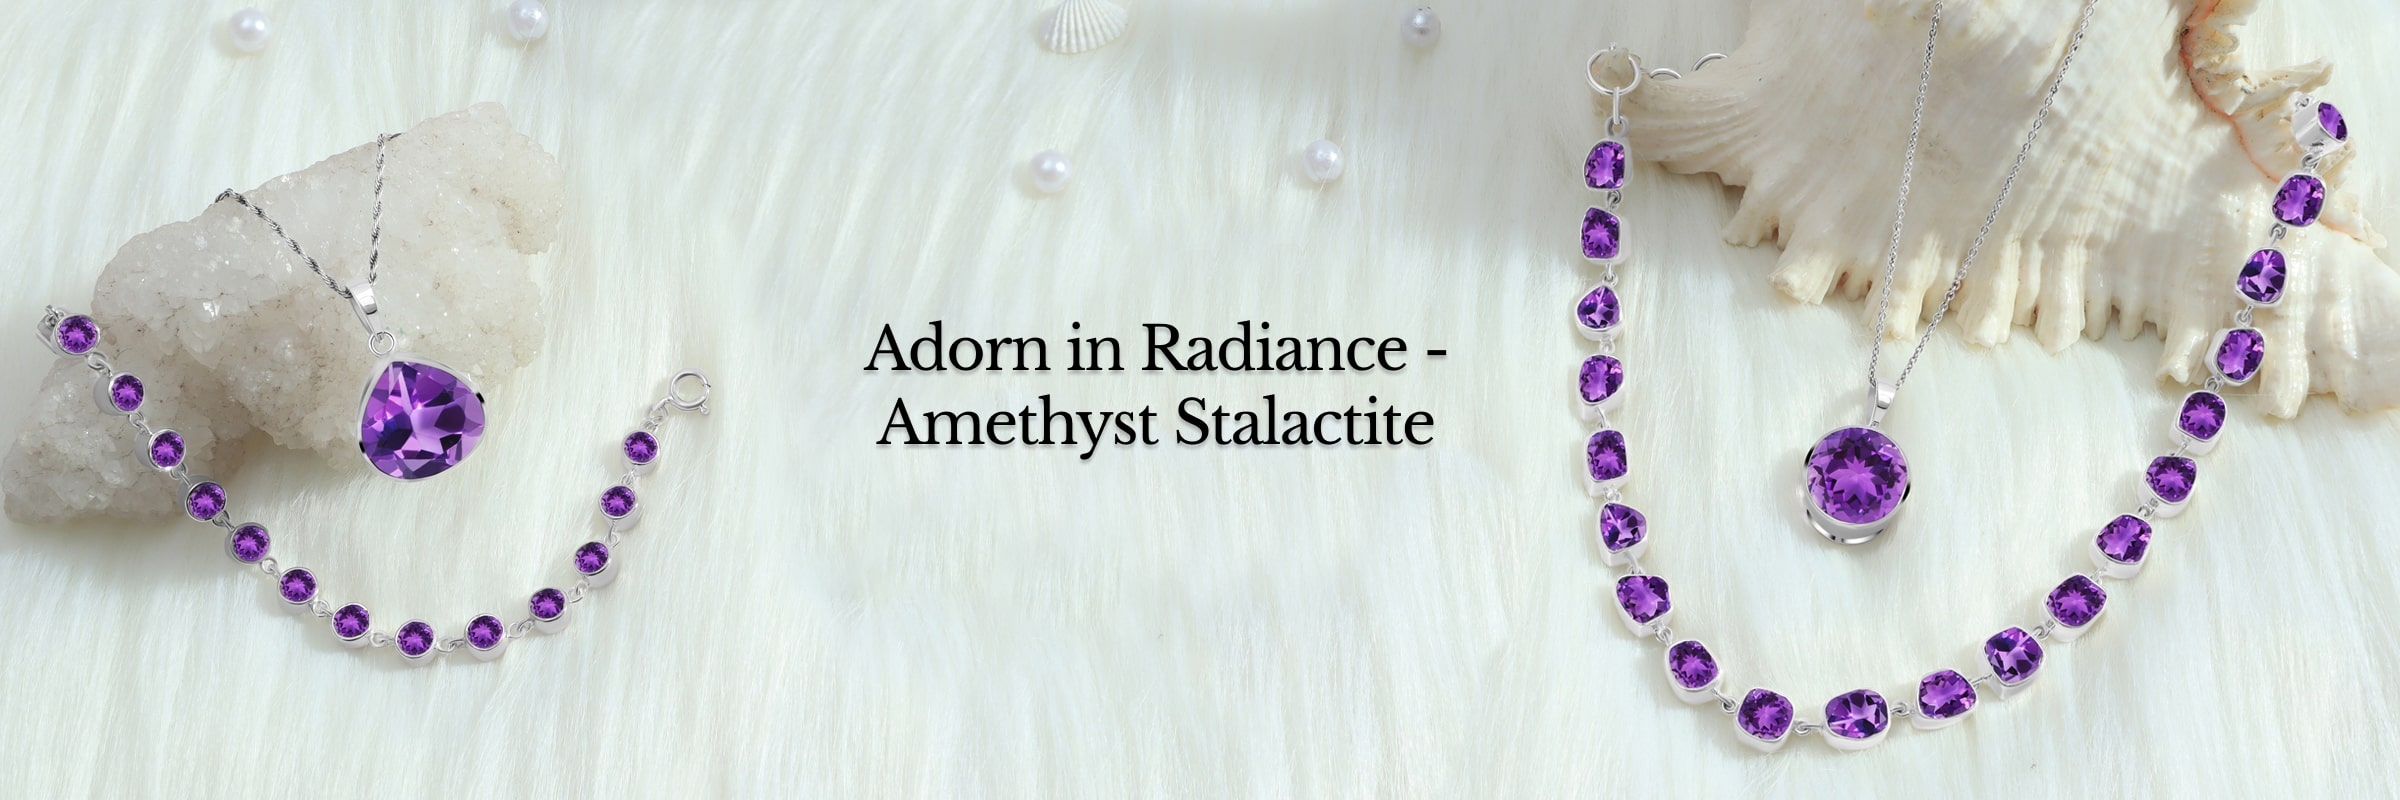 Wearing Amethyst Stalactite Jewelry